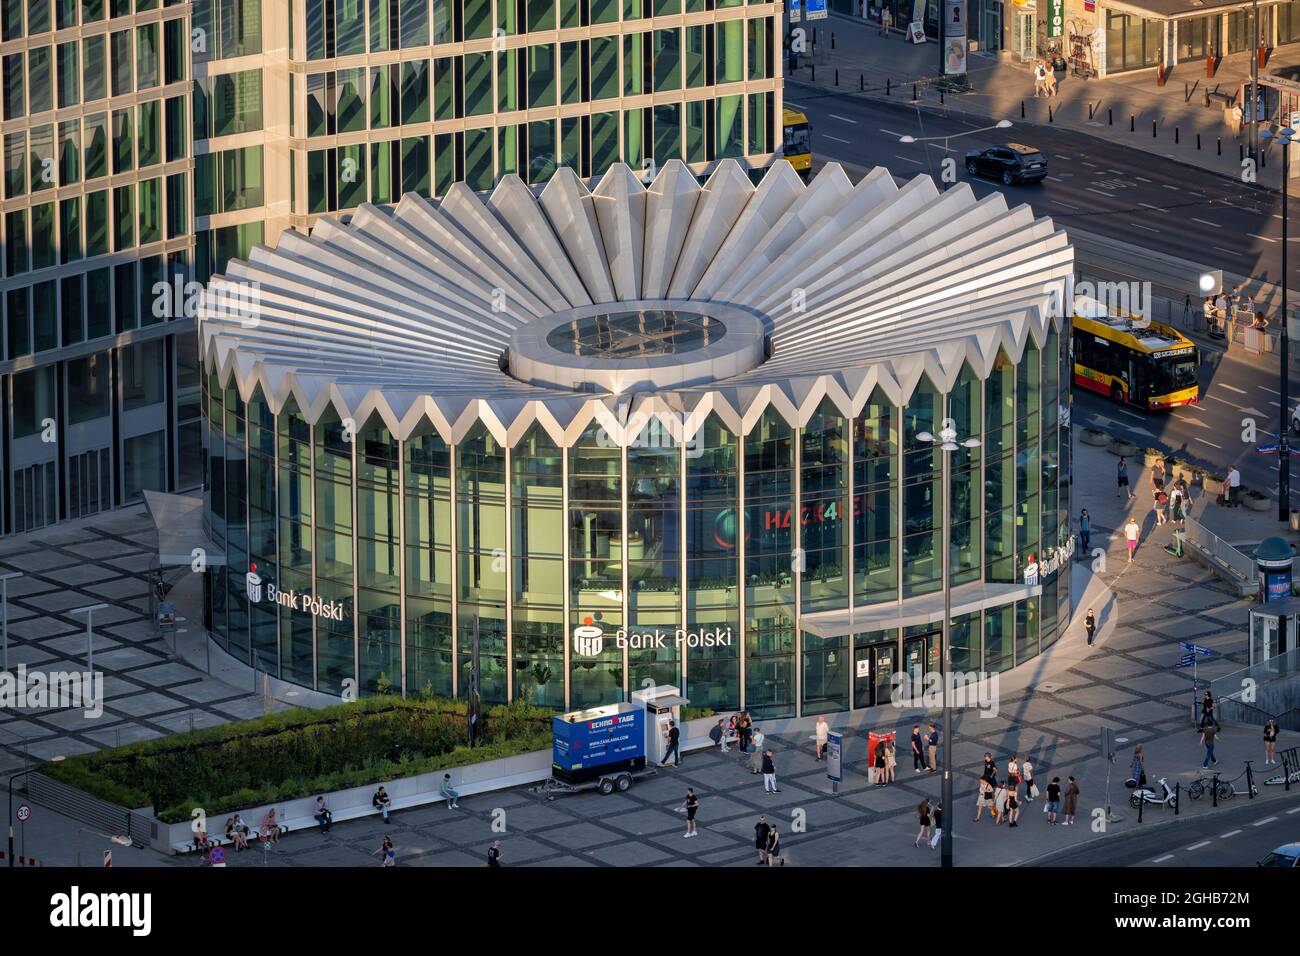 Warsaw, Poland - June 18, 2021: Rotunda of PKO Bank Polski, iconic building in the capital city center at sunset Stock Photo